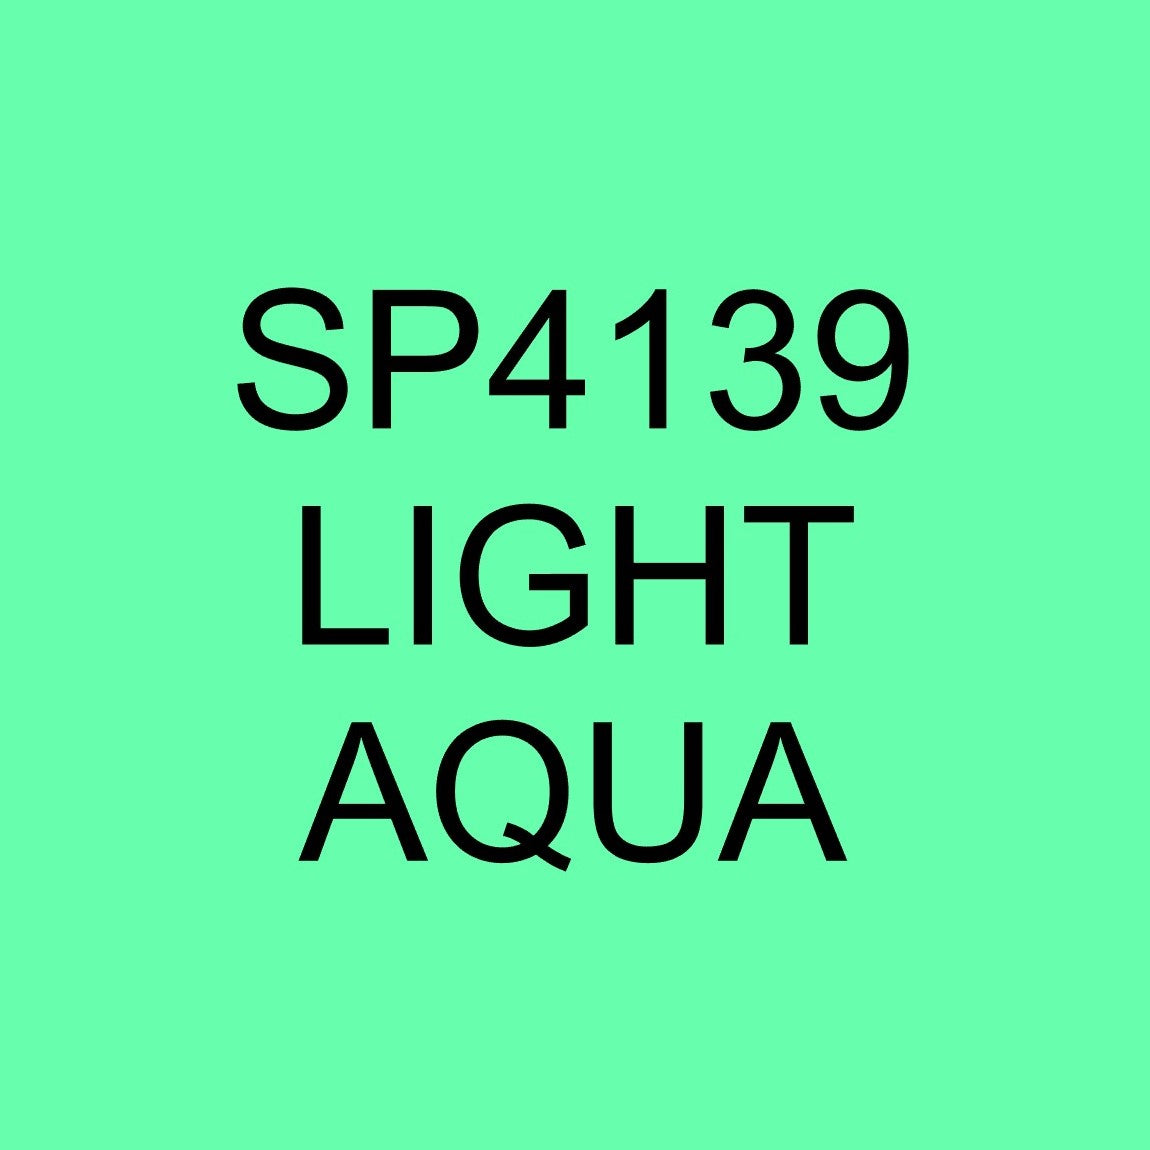 Superior SP4139 Light Aqua 61 CM